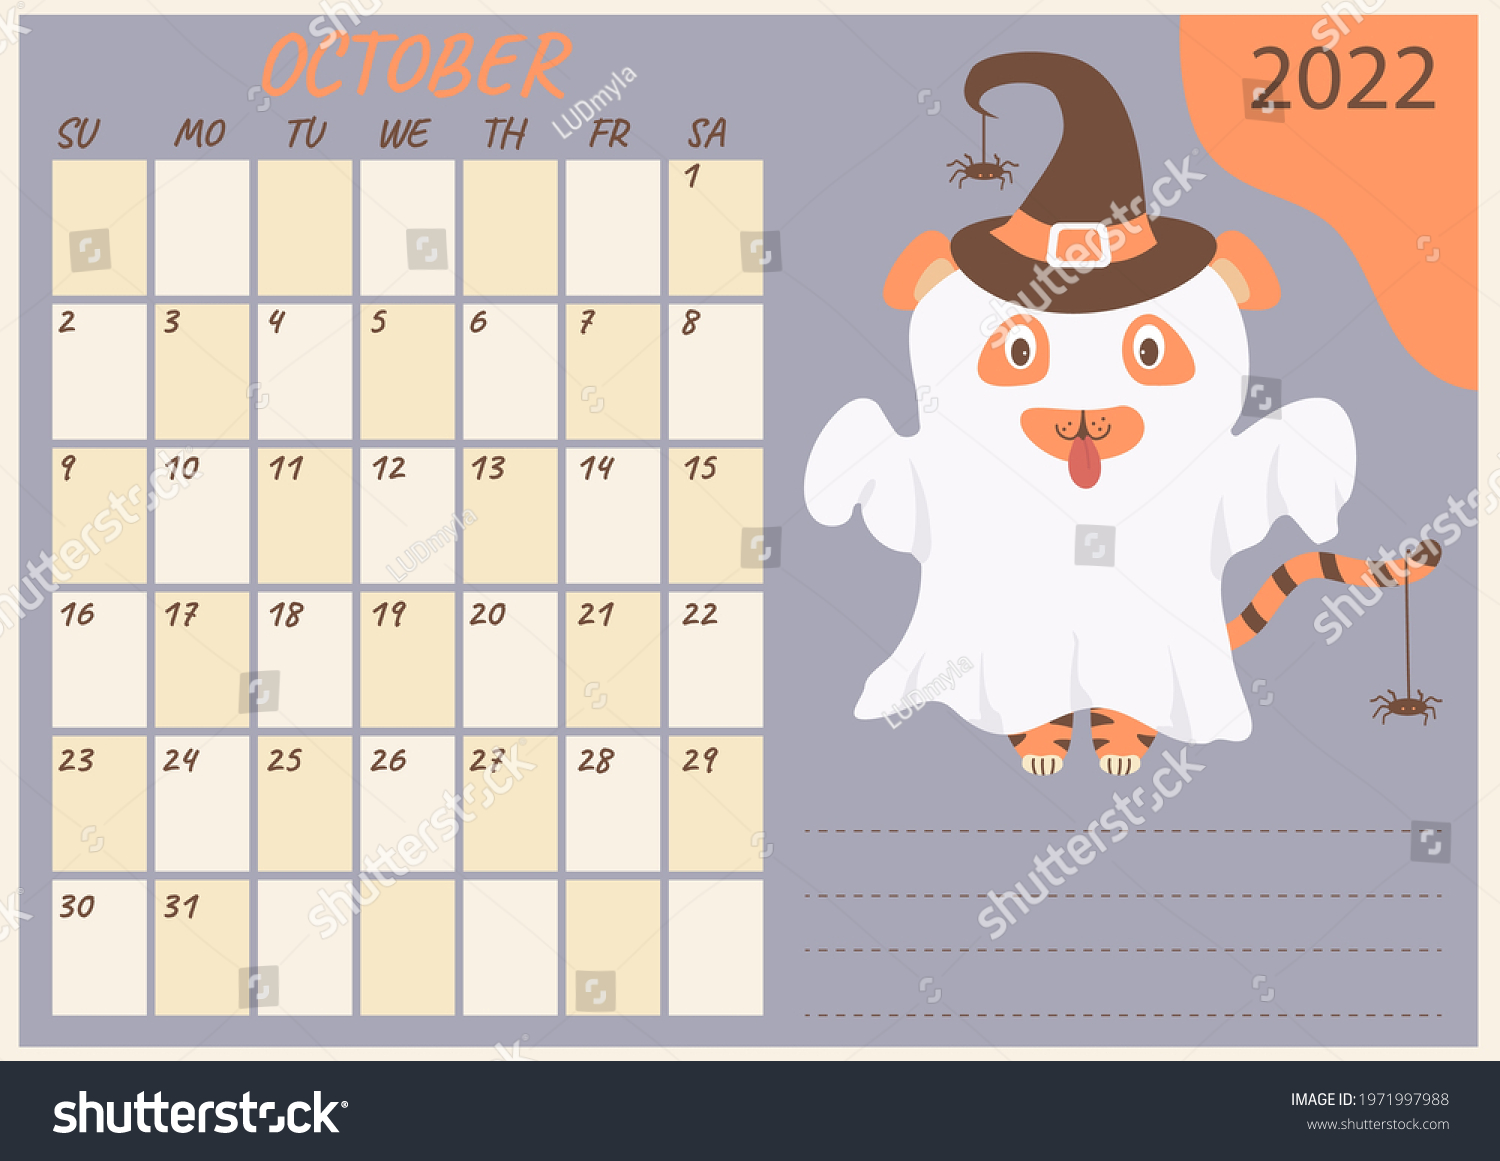 October 2022 Calendar Cute Planner Calendar October 2022 Cute Ghost Stock Vector (Royalty Free)  1971997988